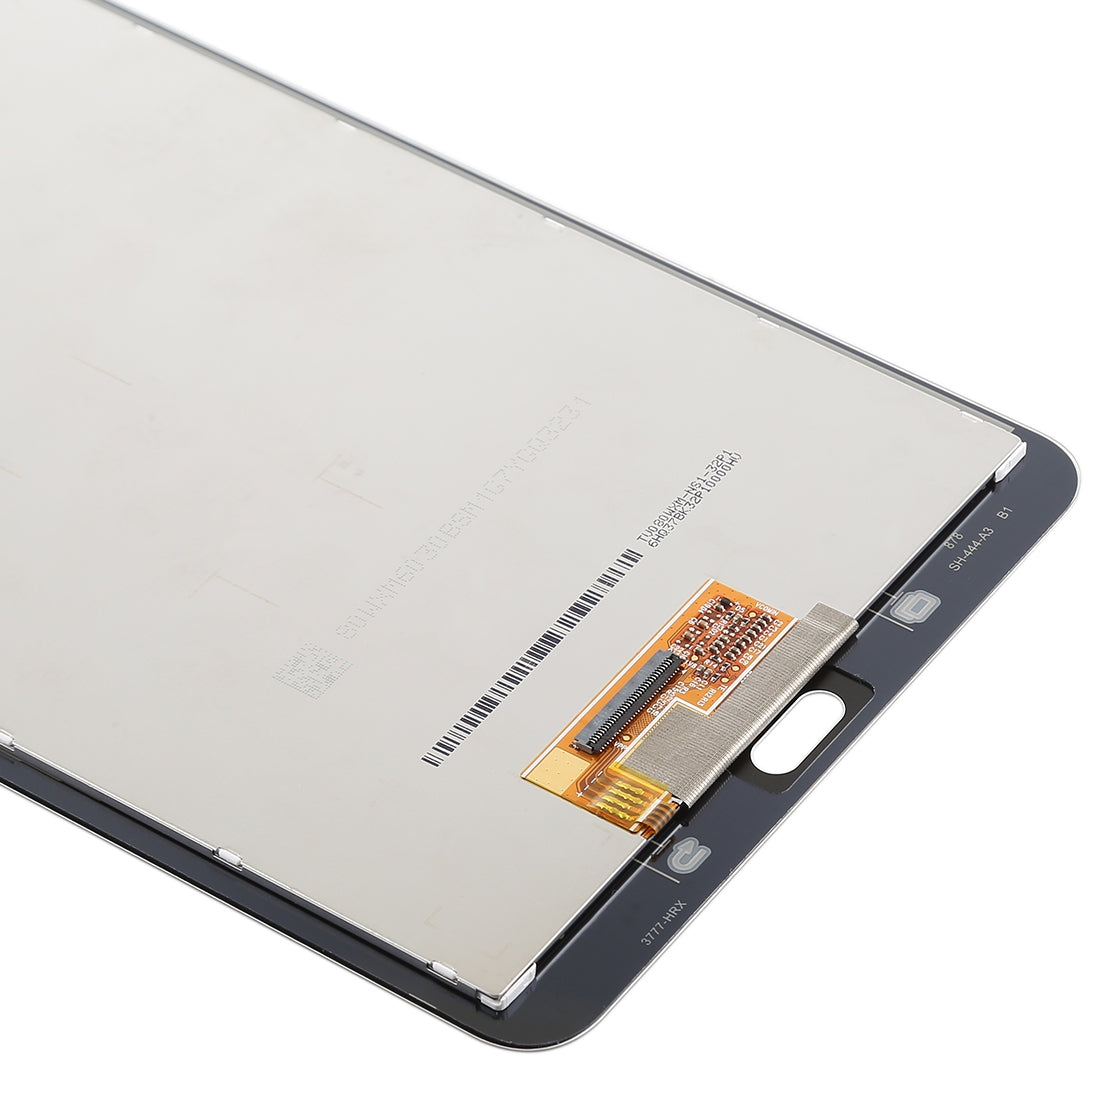 Ecran LCD + Tactile Samsung Galaxy Tab E 8.0 T3777 (Version 3G) Blanc